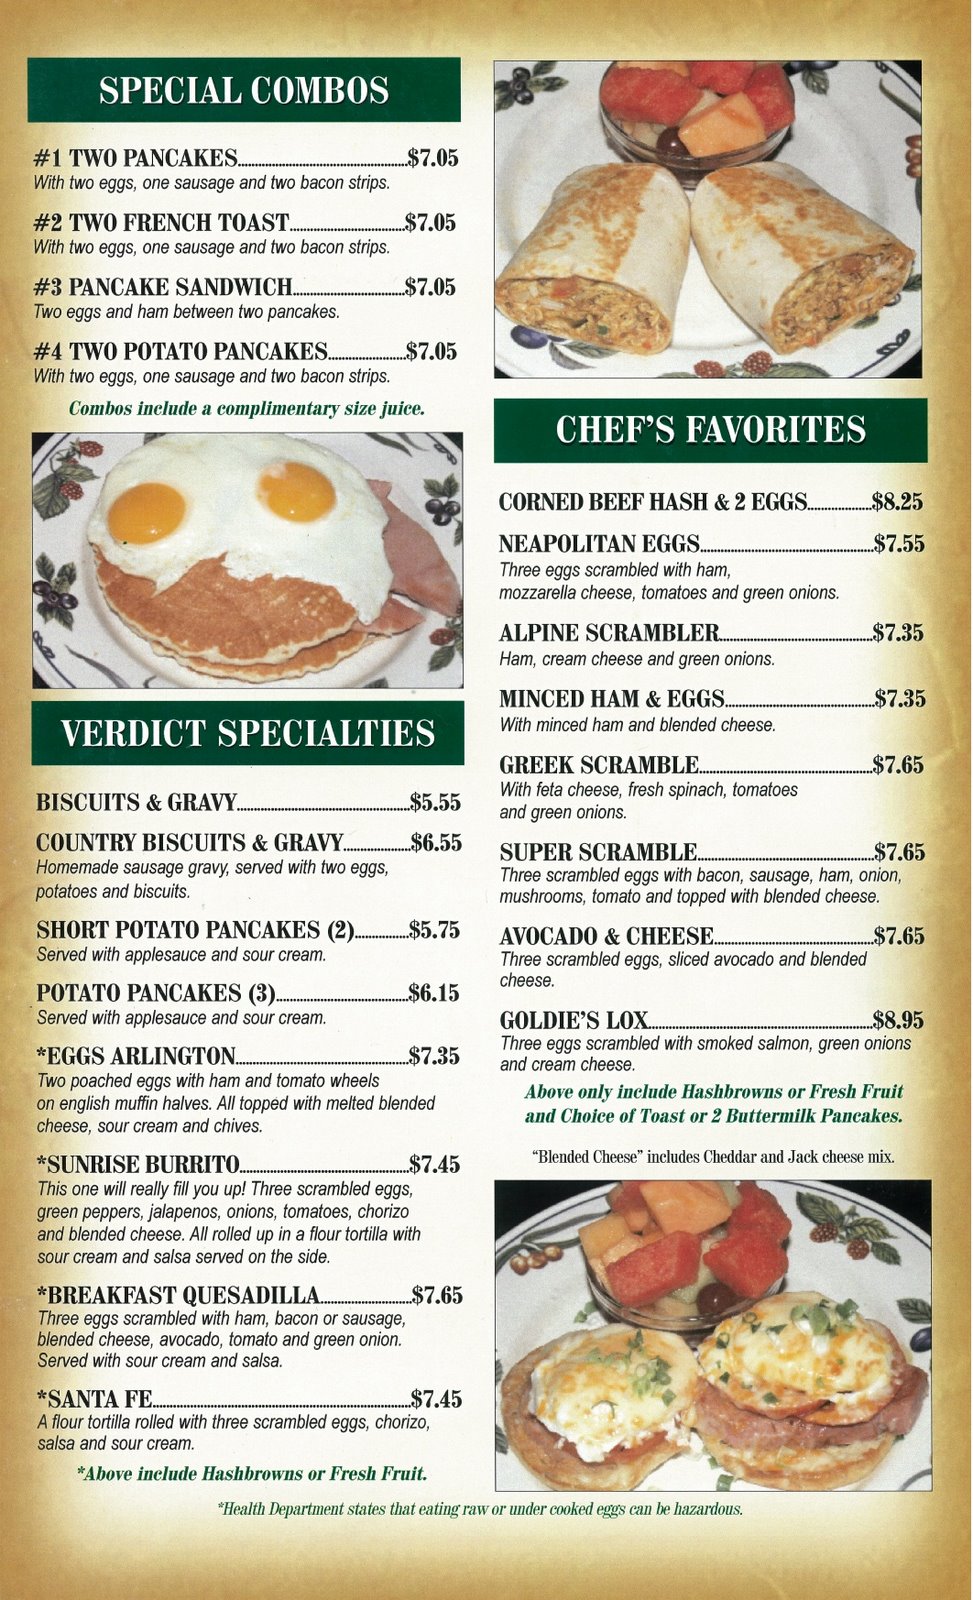 The Verdict Restaurant - Breakfast